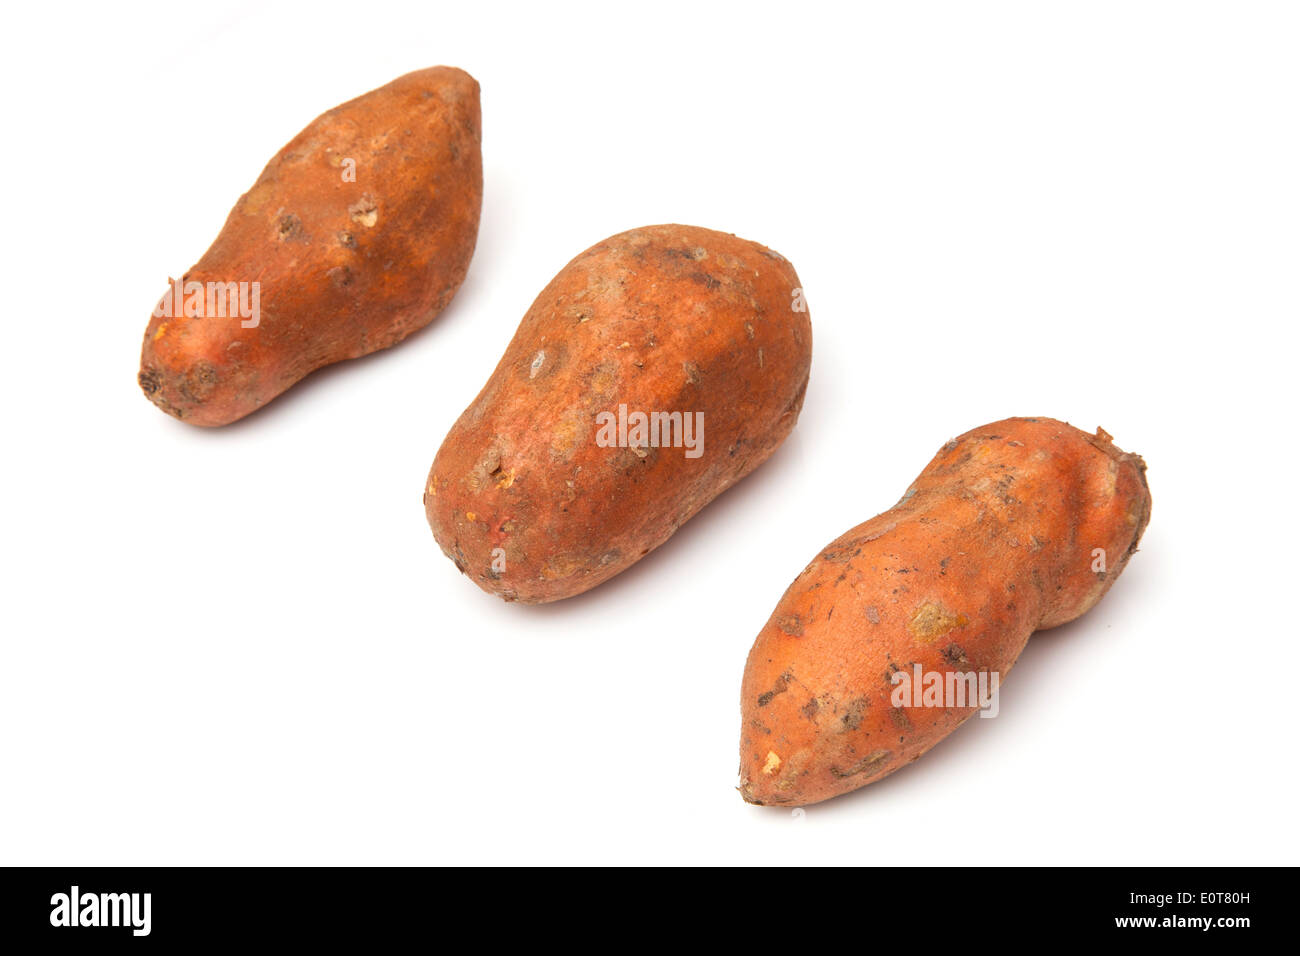 Sweet Potatoes isolated on a white studio background. Stock Photo